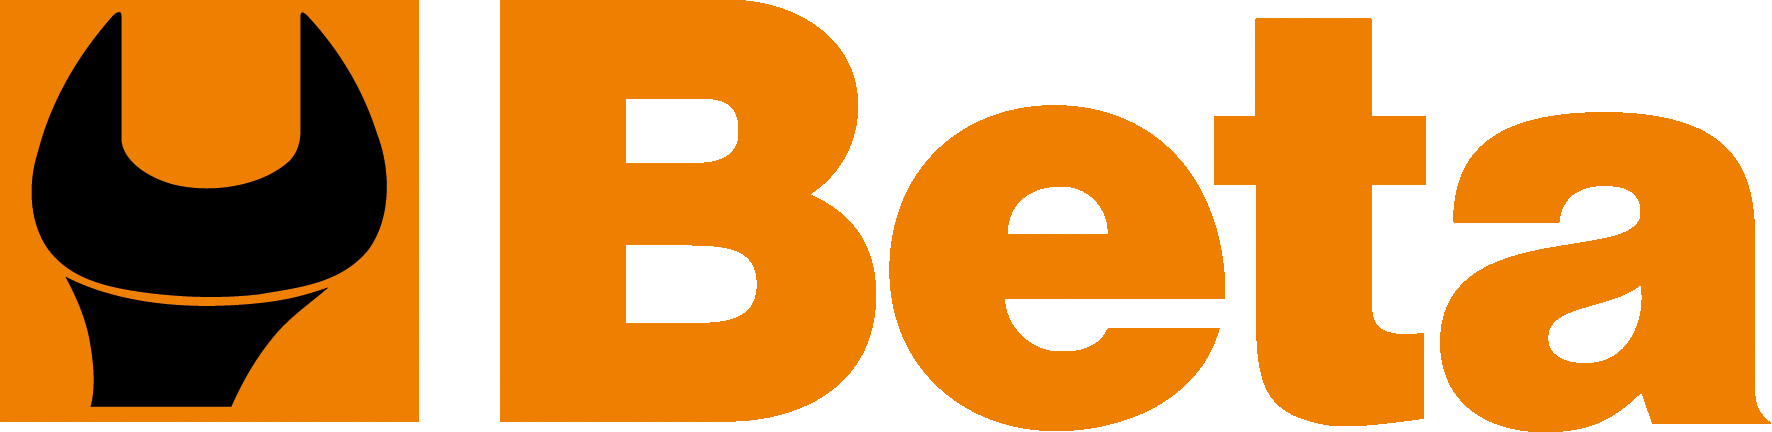 Logo Beta Utensili